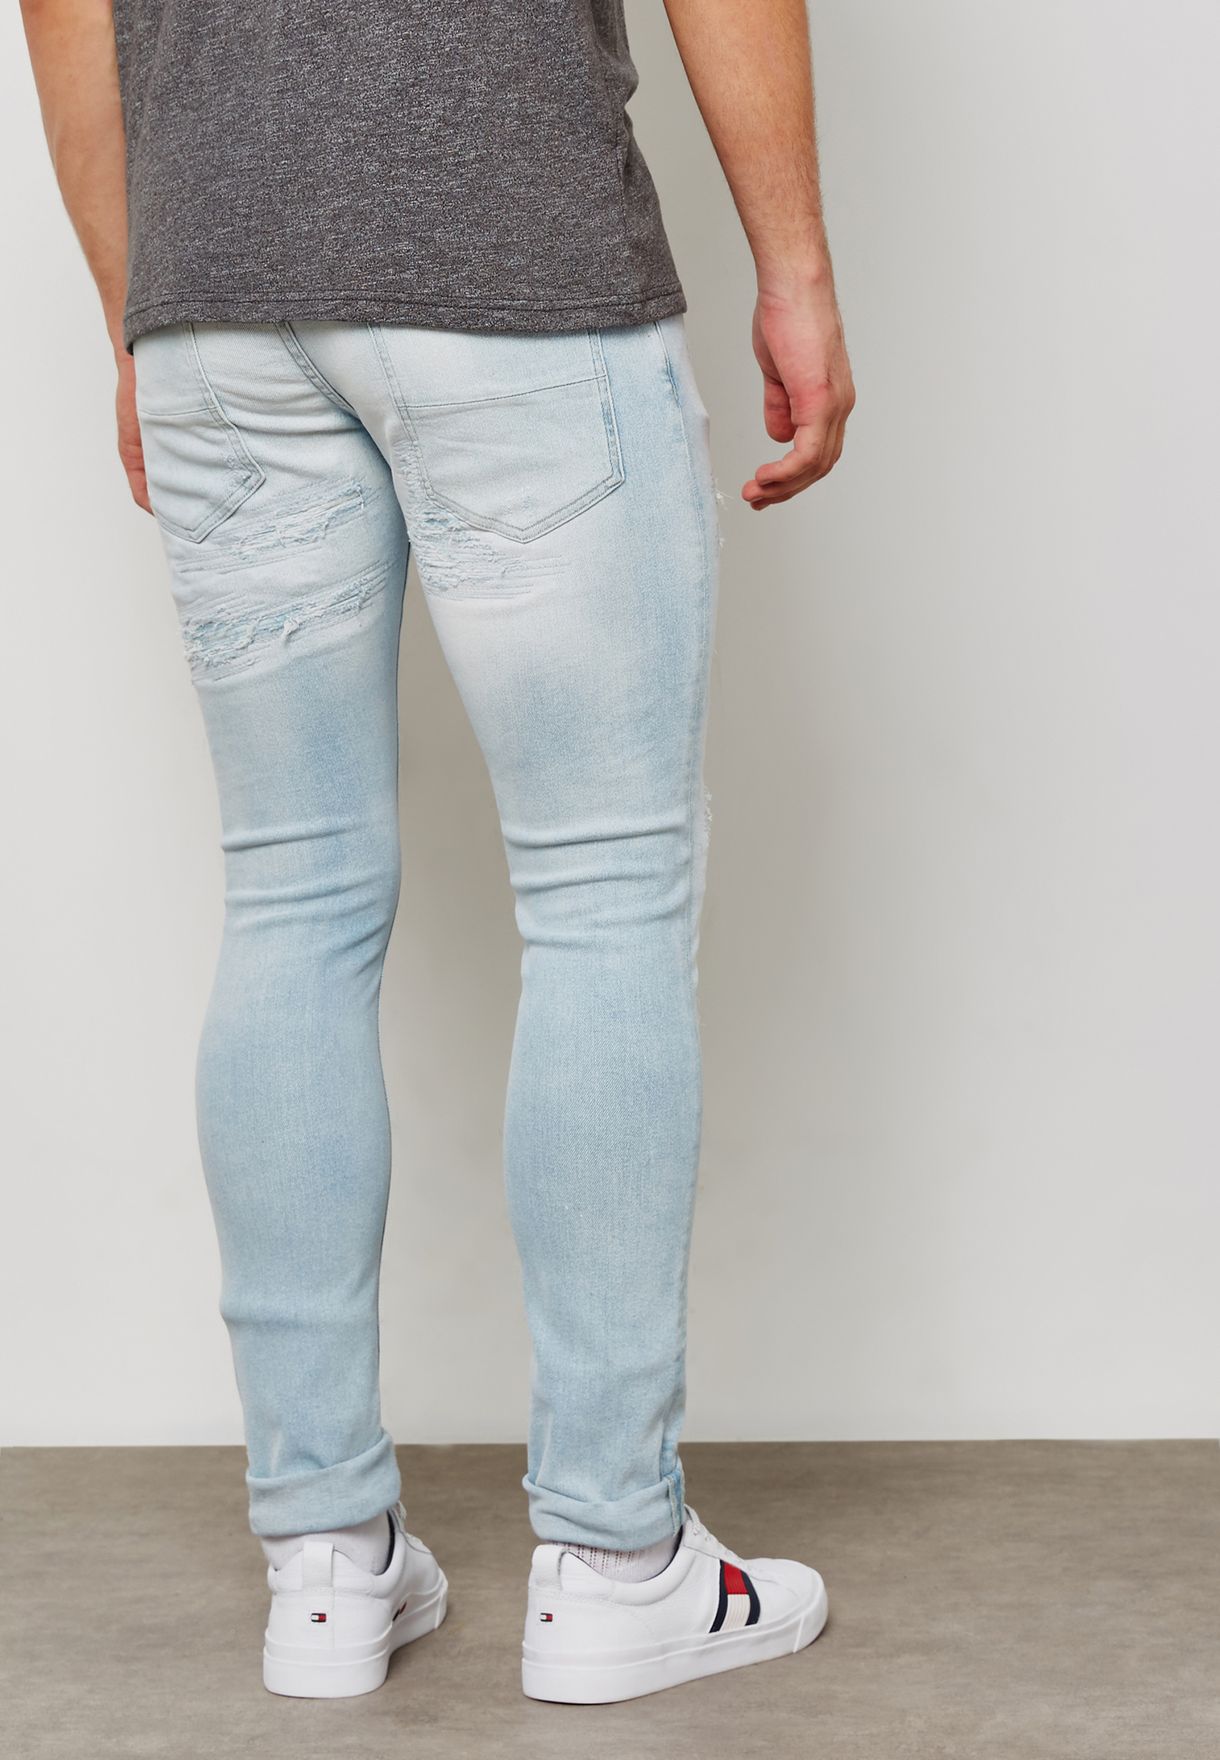 lewis hamilton distressed jeans